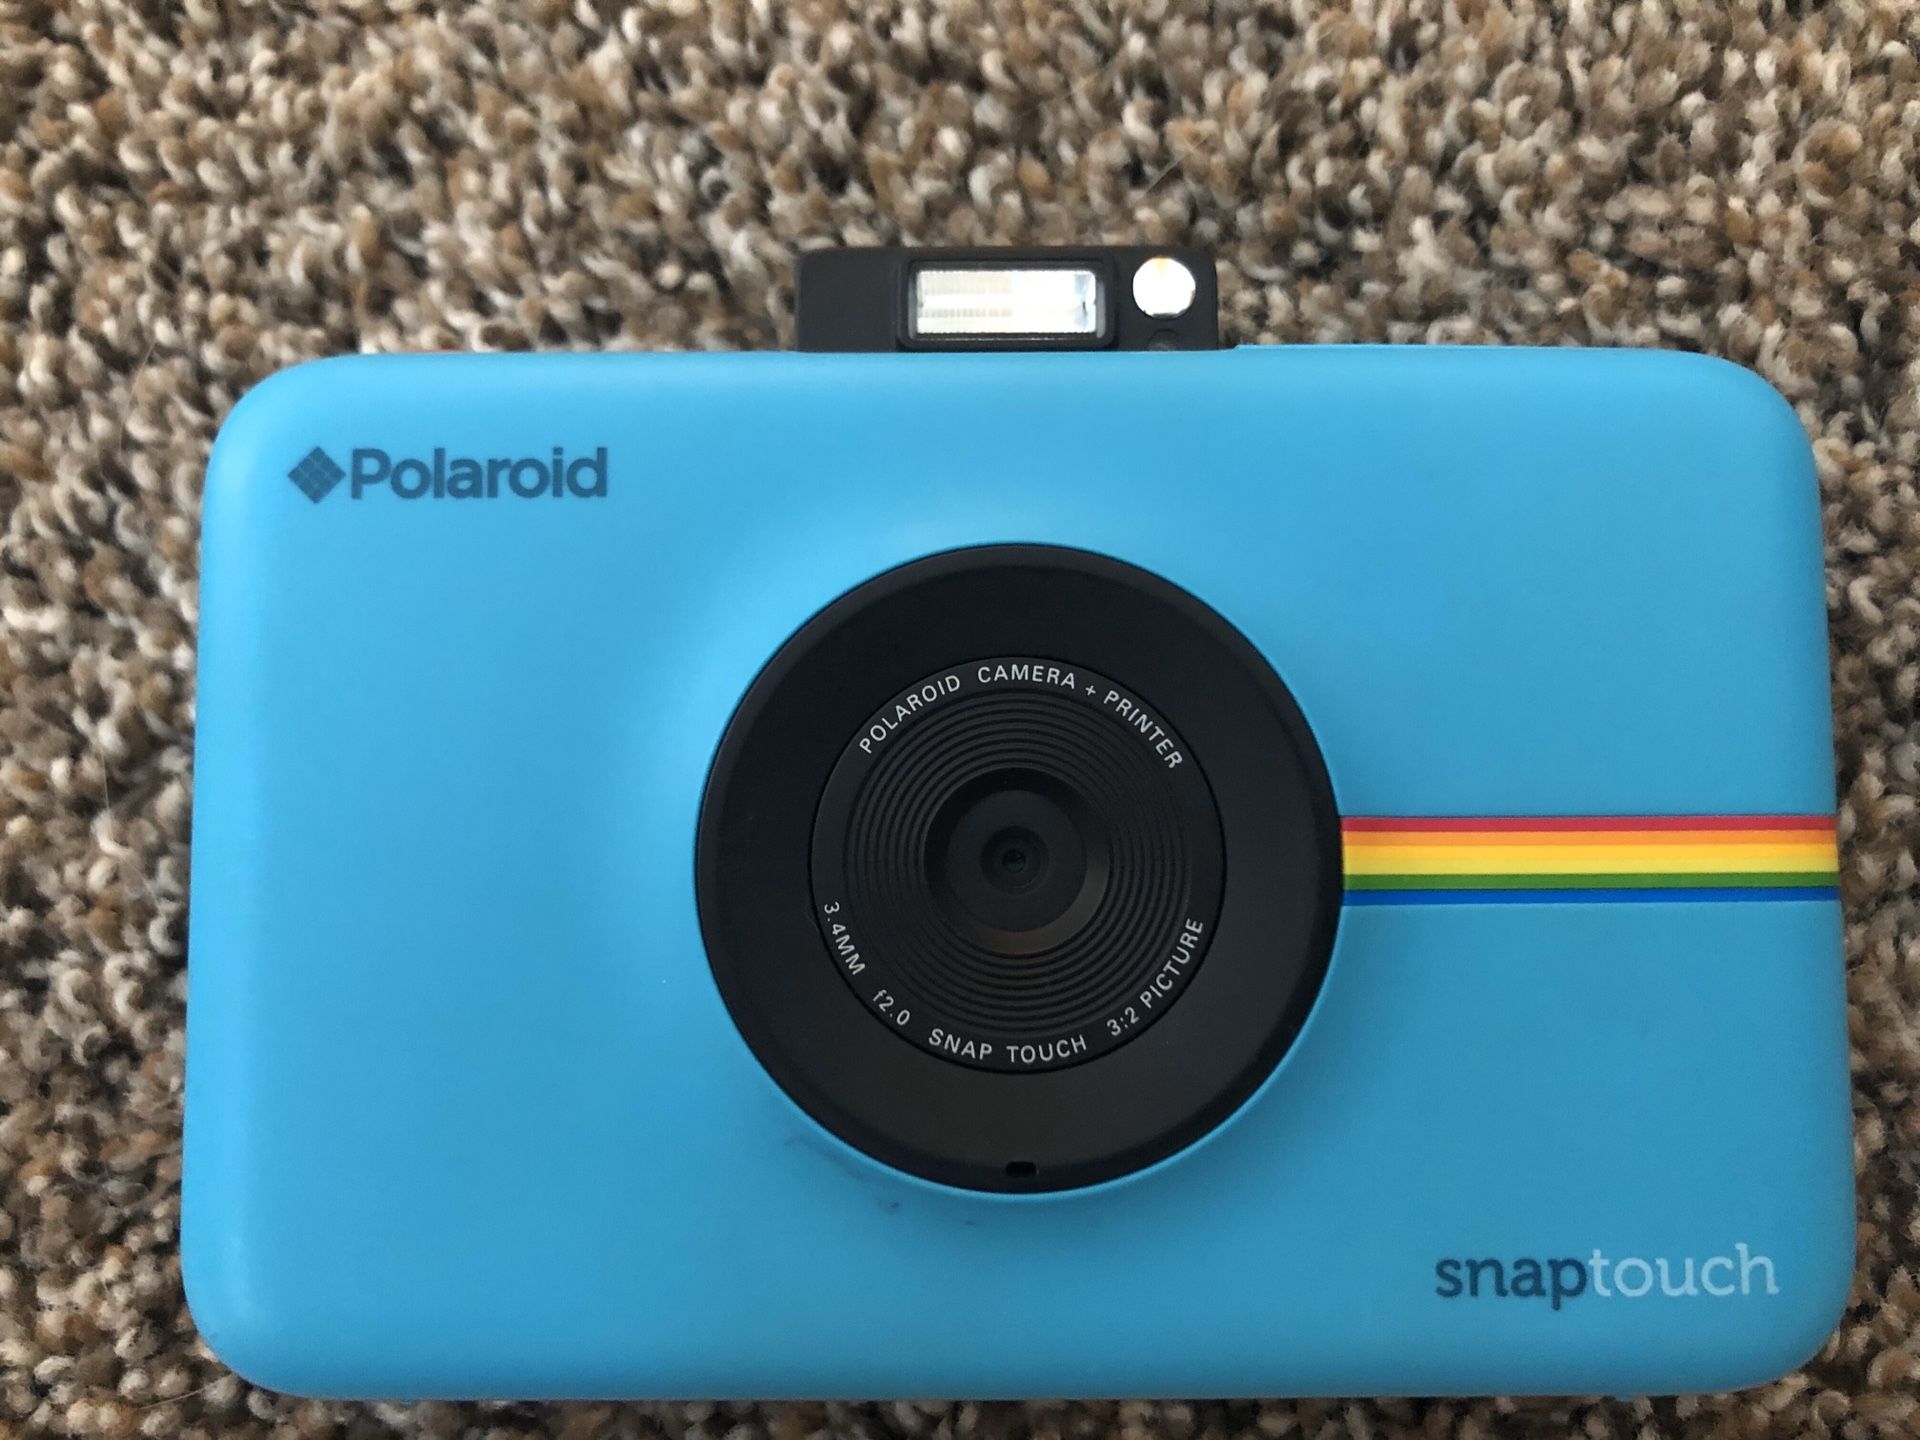 Polaroid snaptouch camera